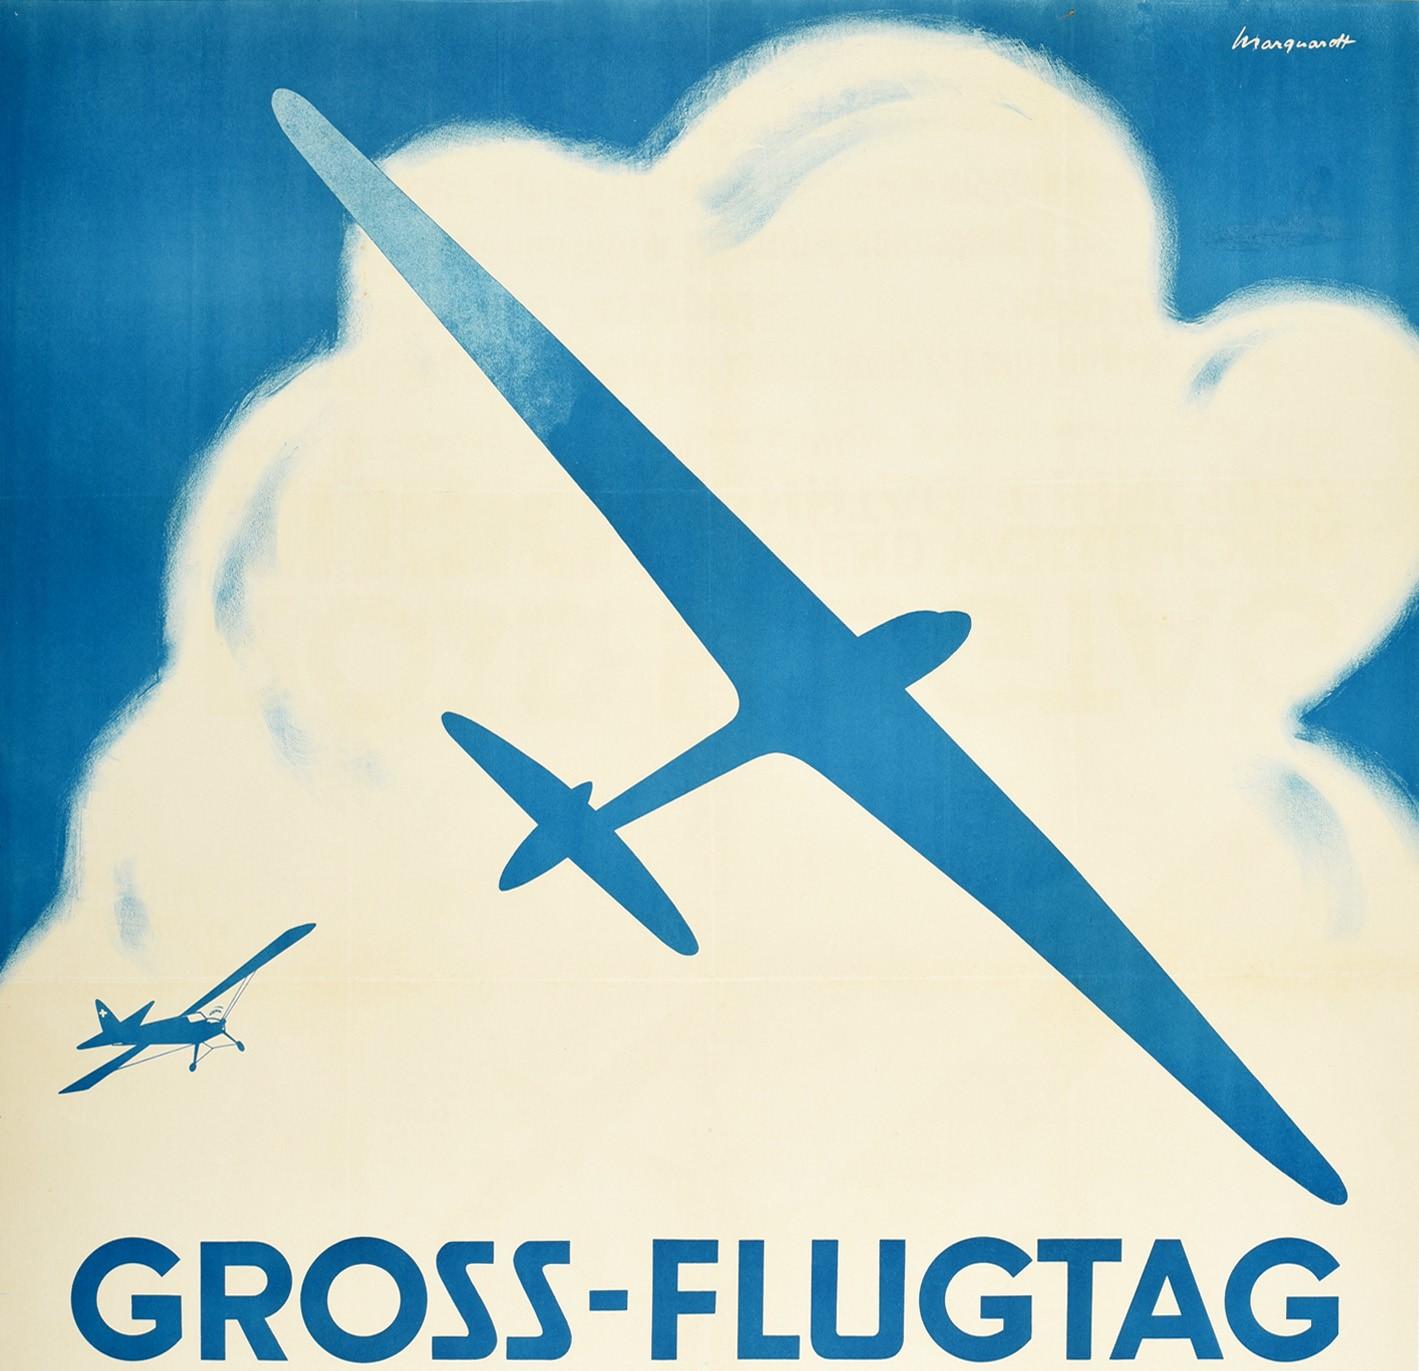 glider poster